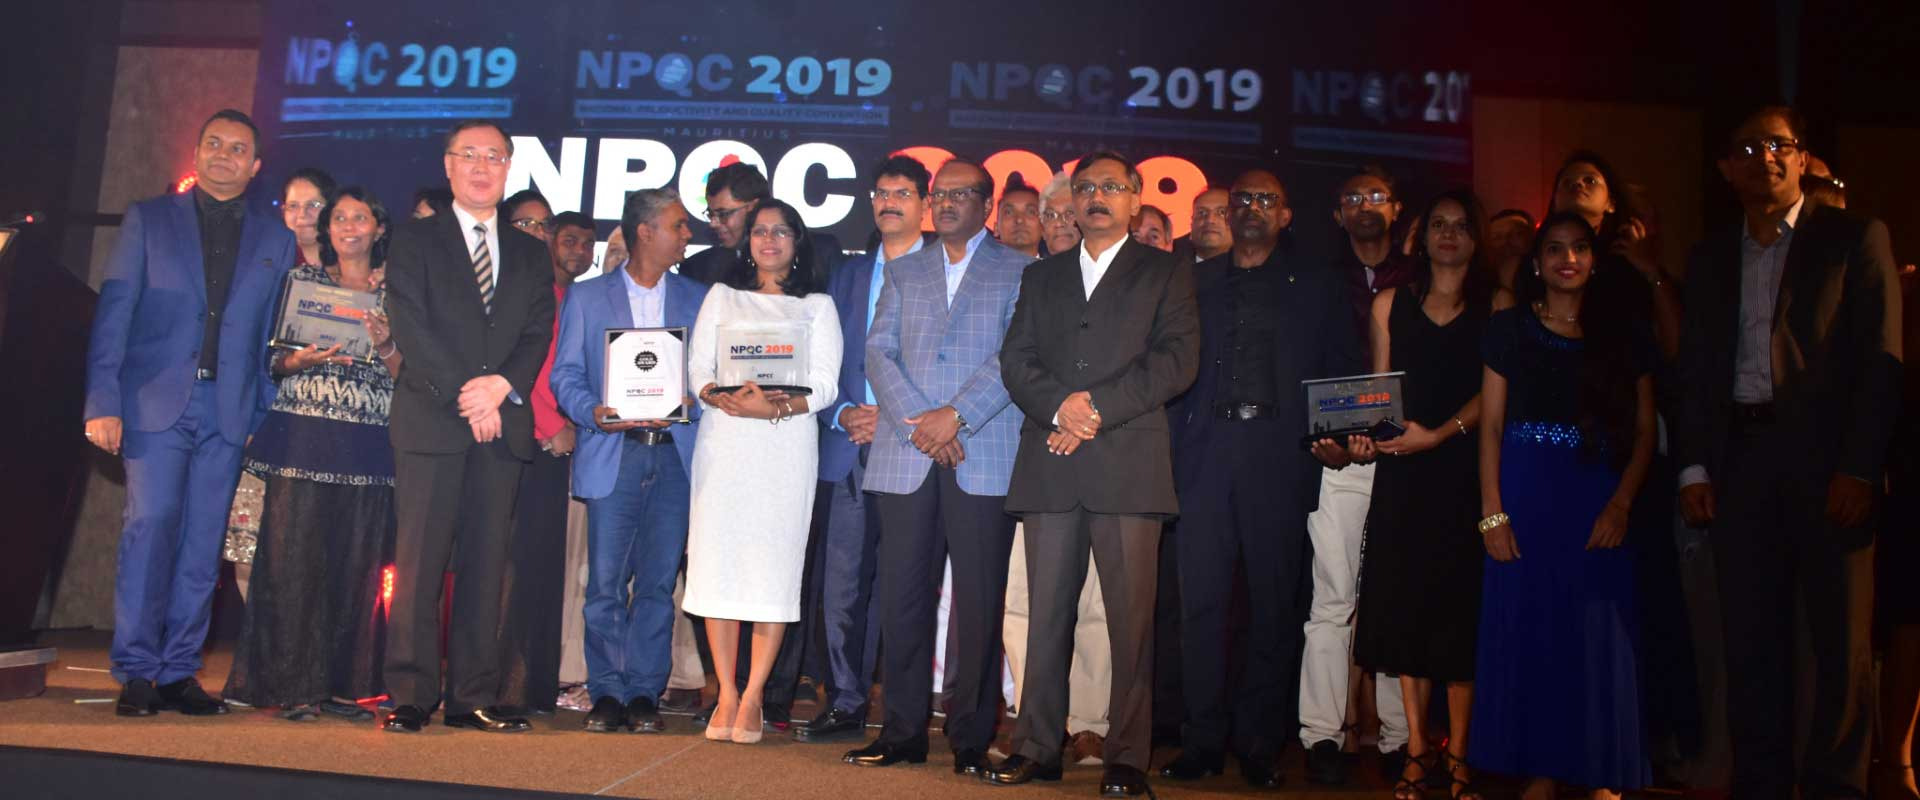 NPCC culminates NPQC 2019 with Award Night, announces six Grand Winners